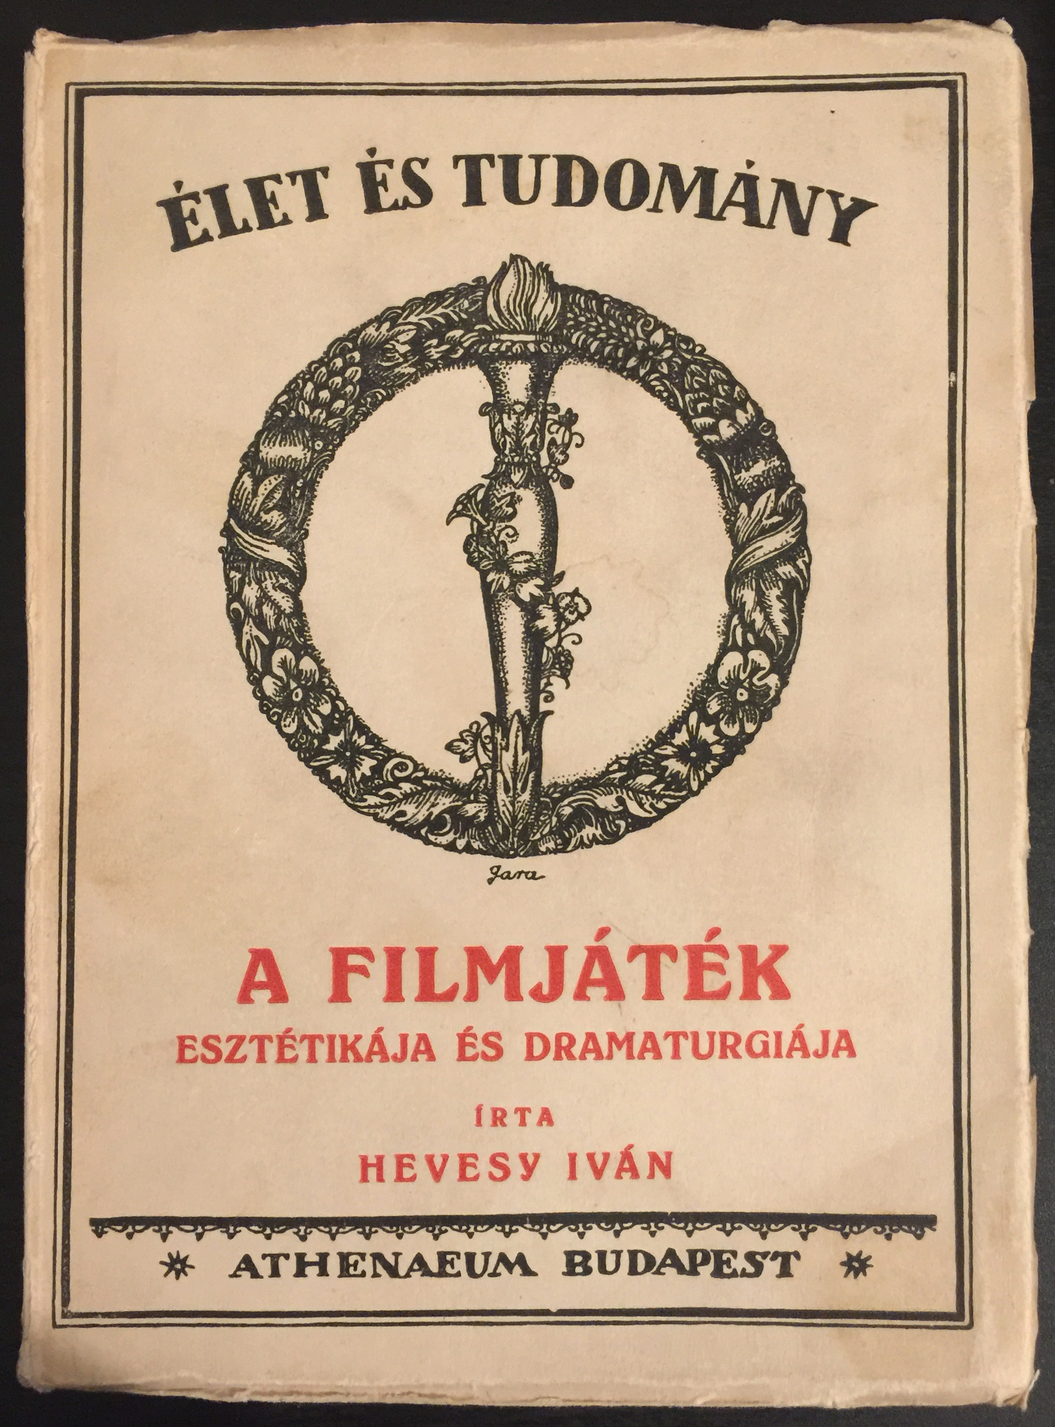 Ivan Hevesy: The aesthetics and dramaturgy of film